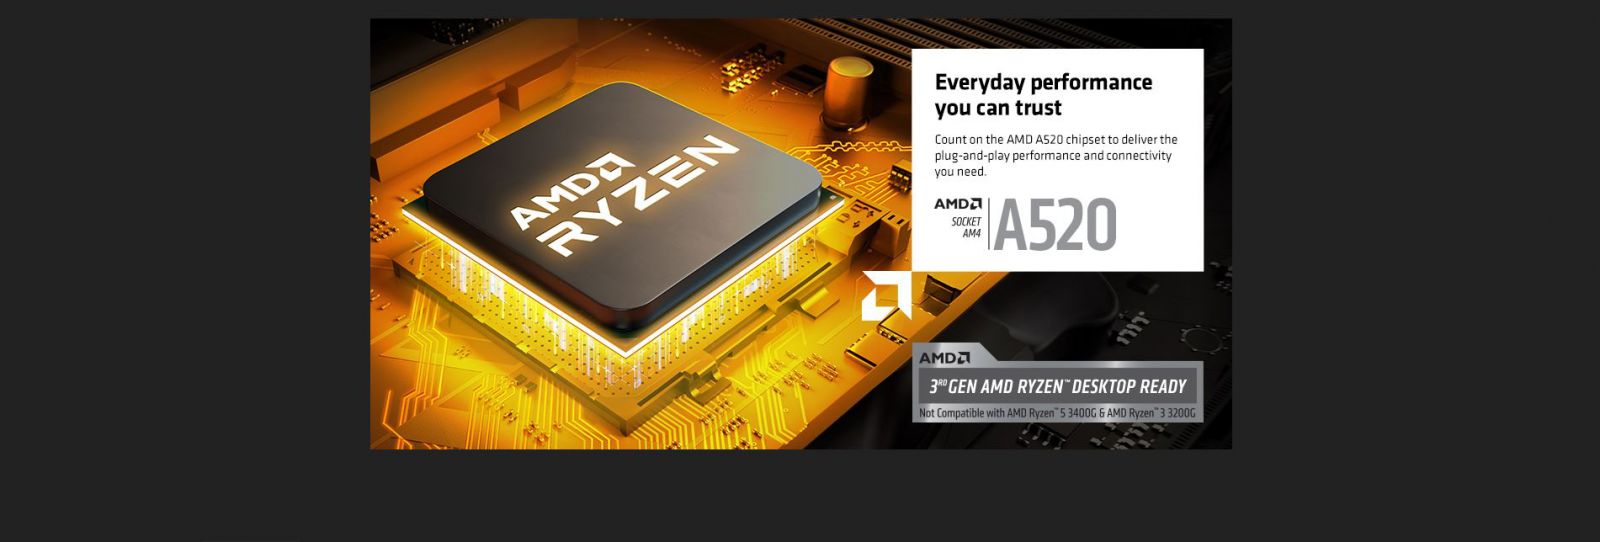 MSI A520M-A PRO AMD mATX Motherboard 